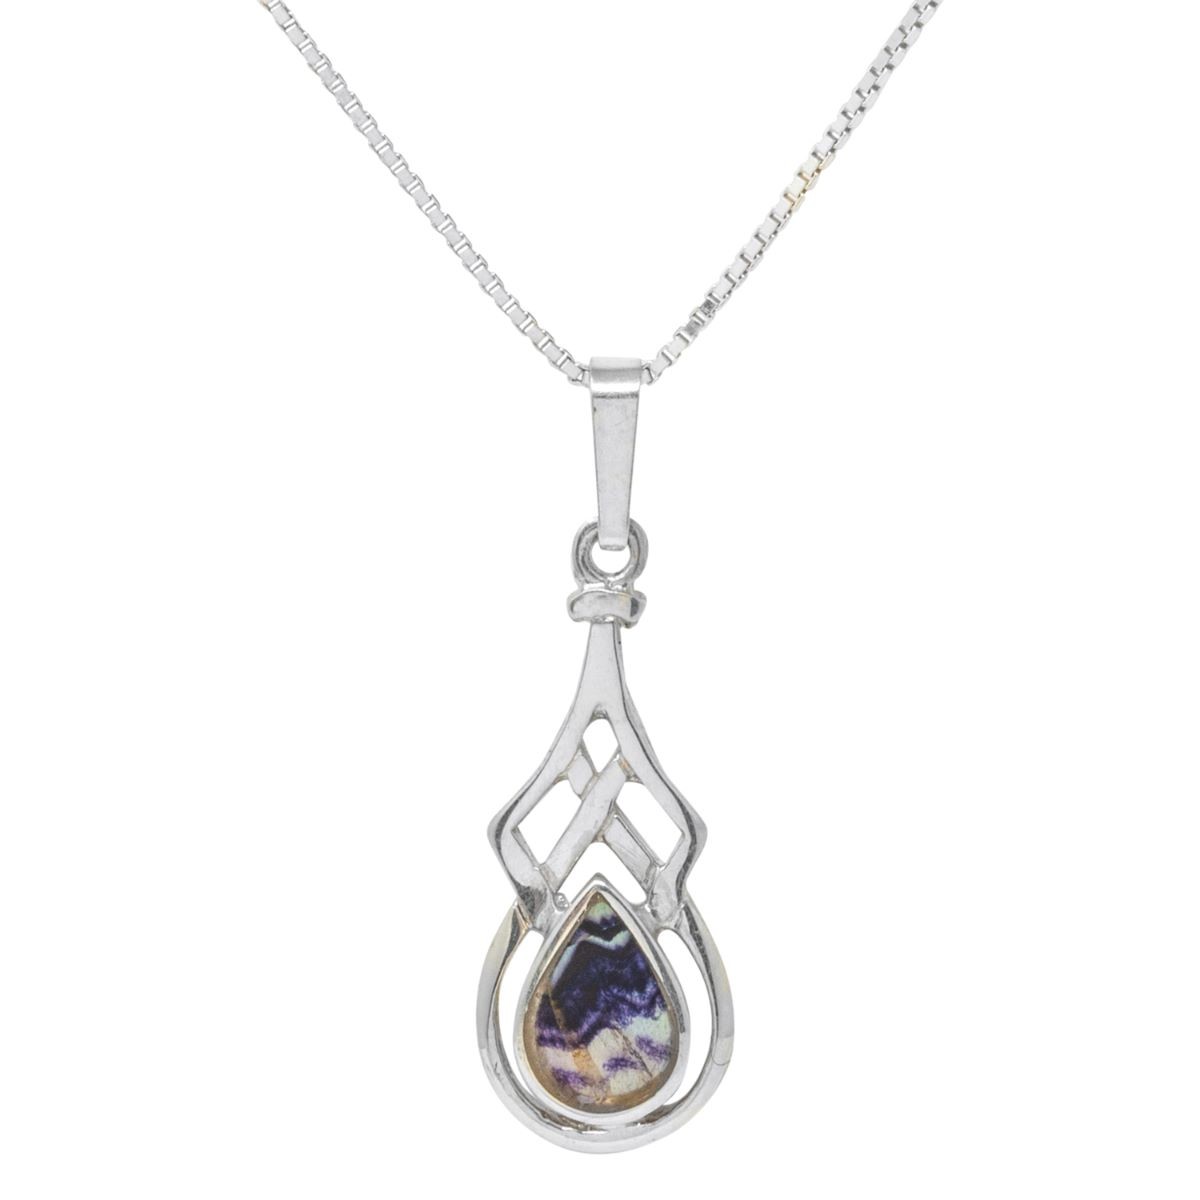 Blue John fluorite crystal pendant gemstone nec... - Folksy